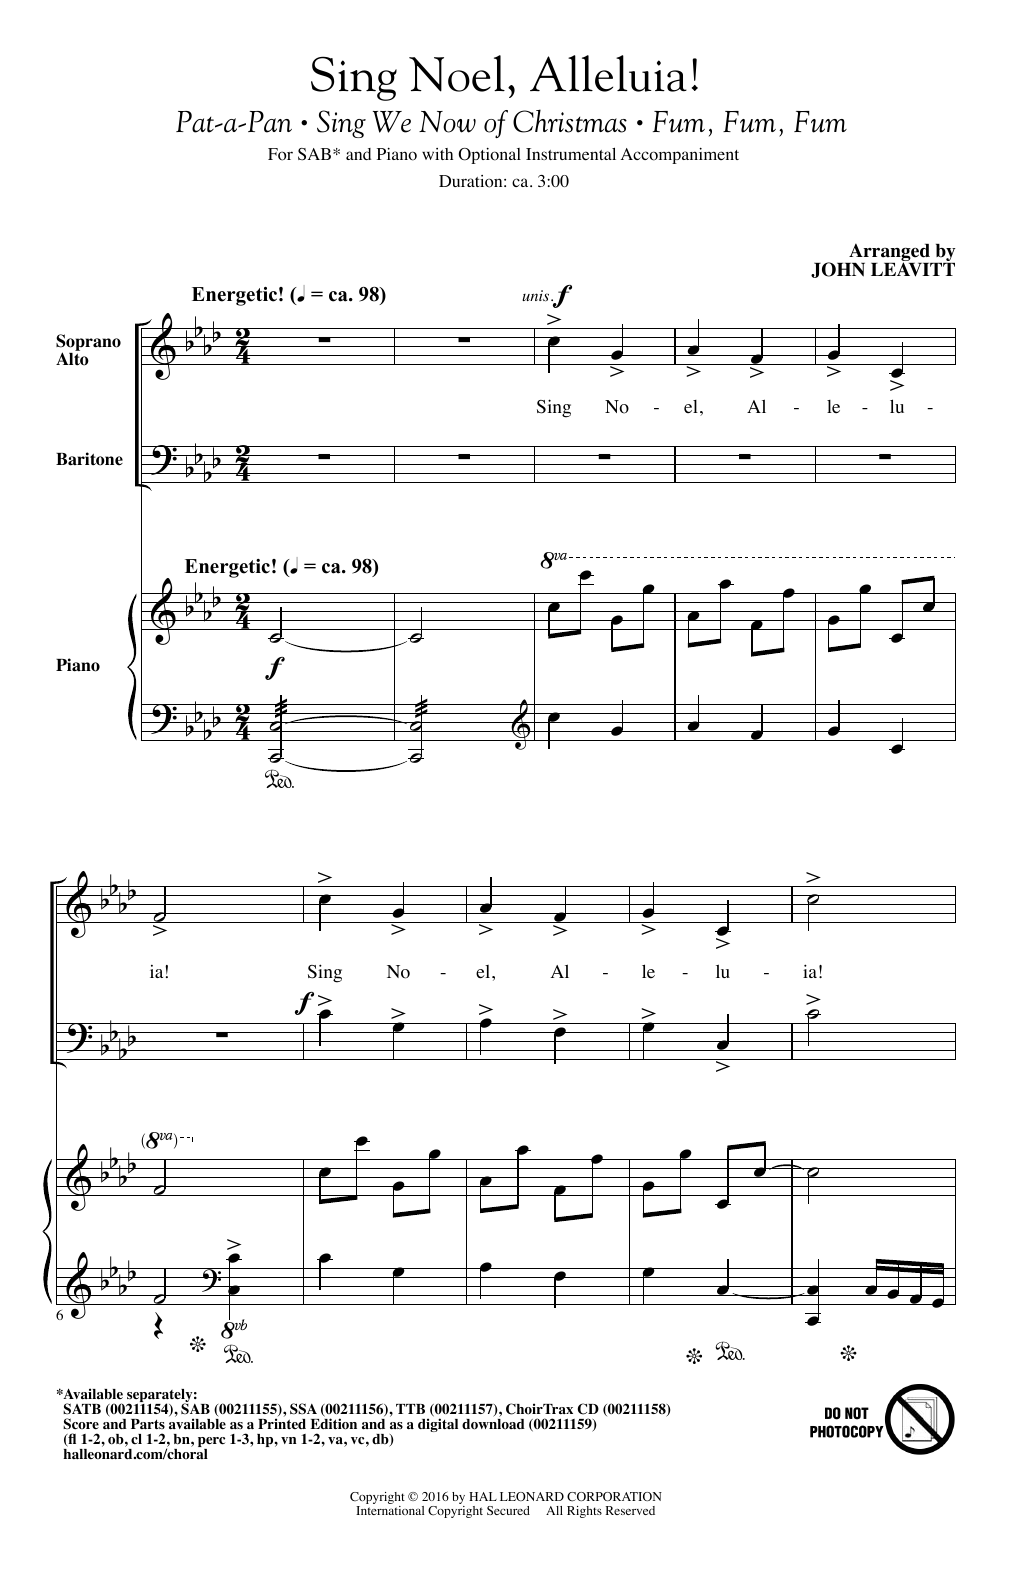 Download John Leavitt Sing Noel, Alleluia! Sheet Music and learn how to play SAB PDF digital score in minutes